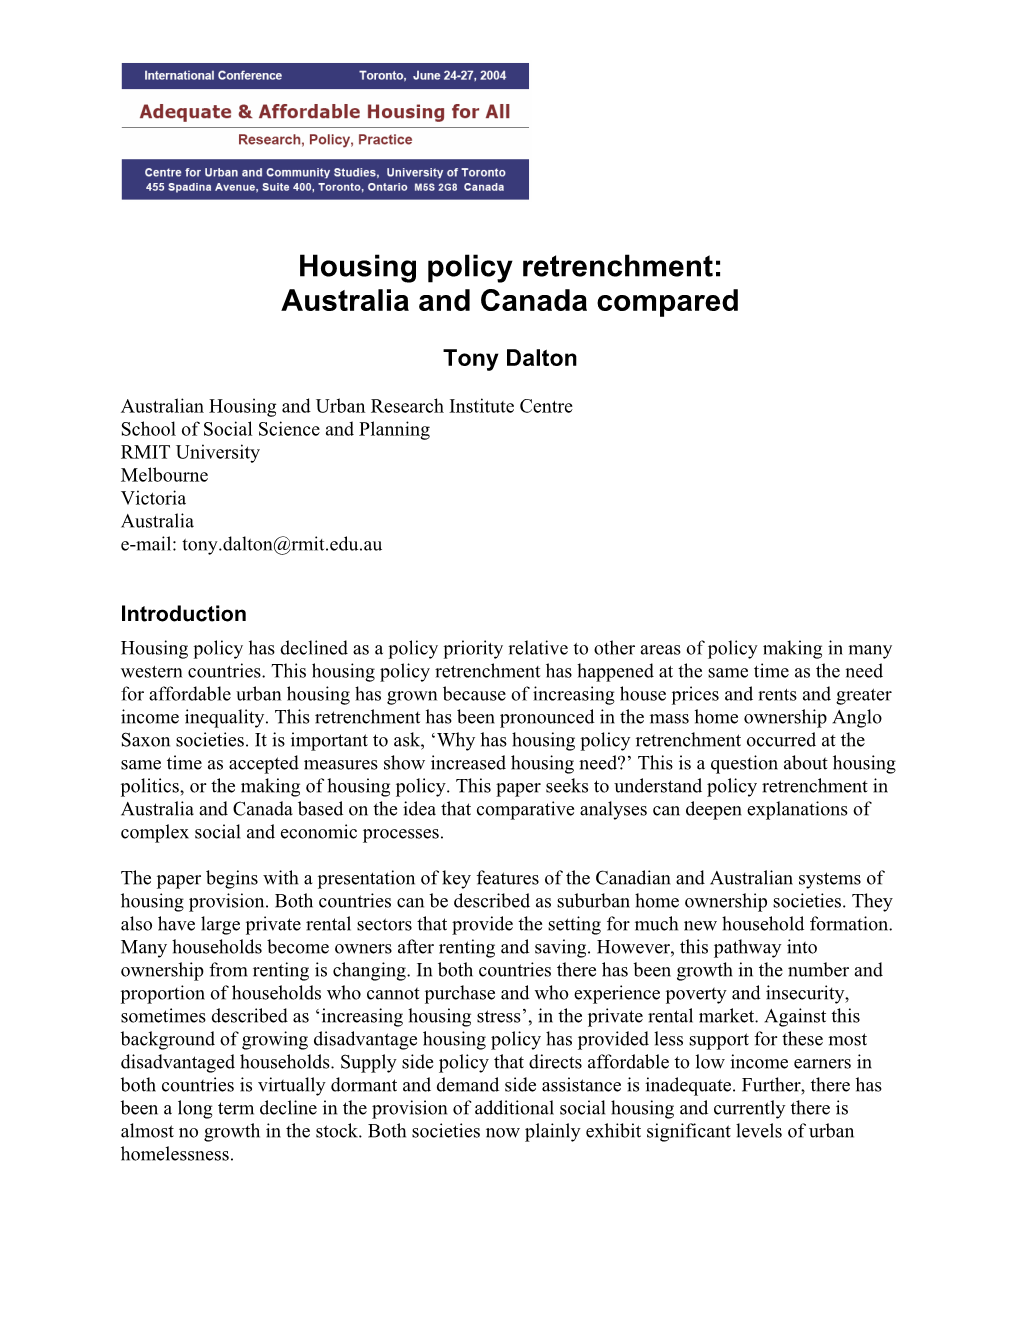 Housing Policy Retrenchment: Australia and Canada Compared